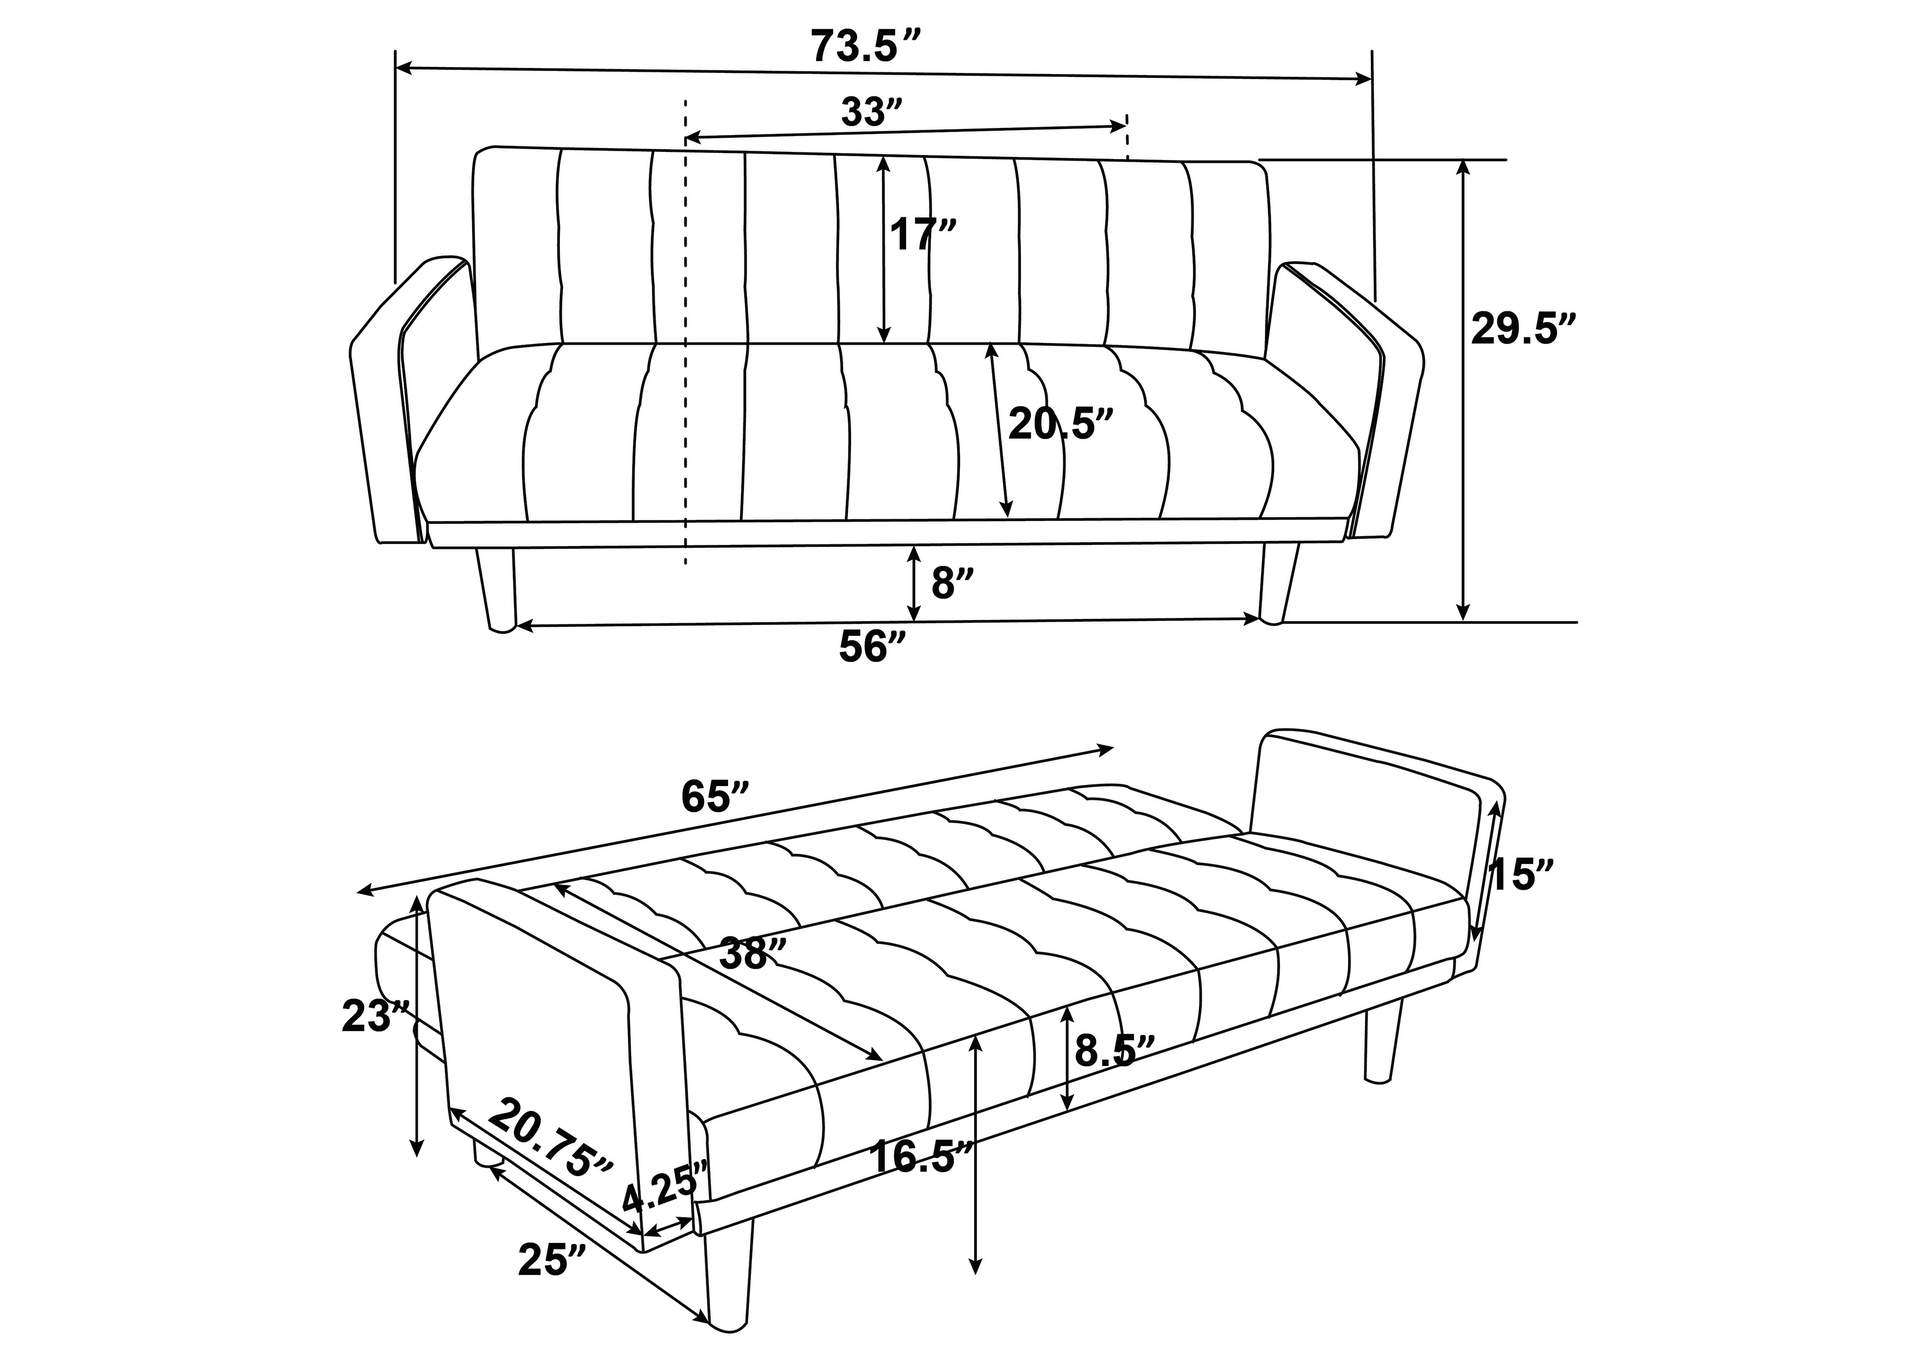 Sommer Tufted Sofa Bed Grey,Coaster Furniture